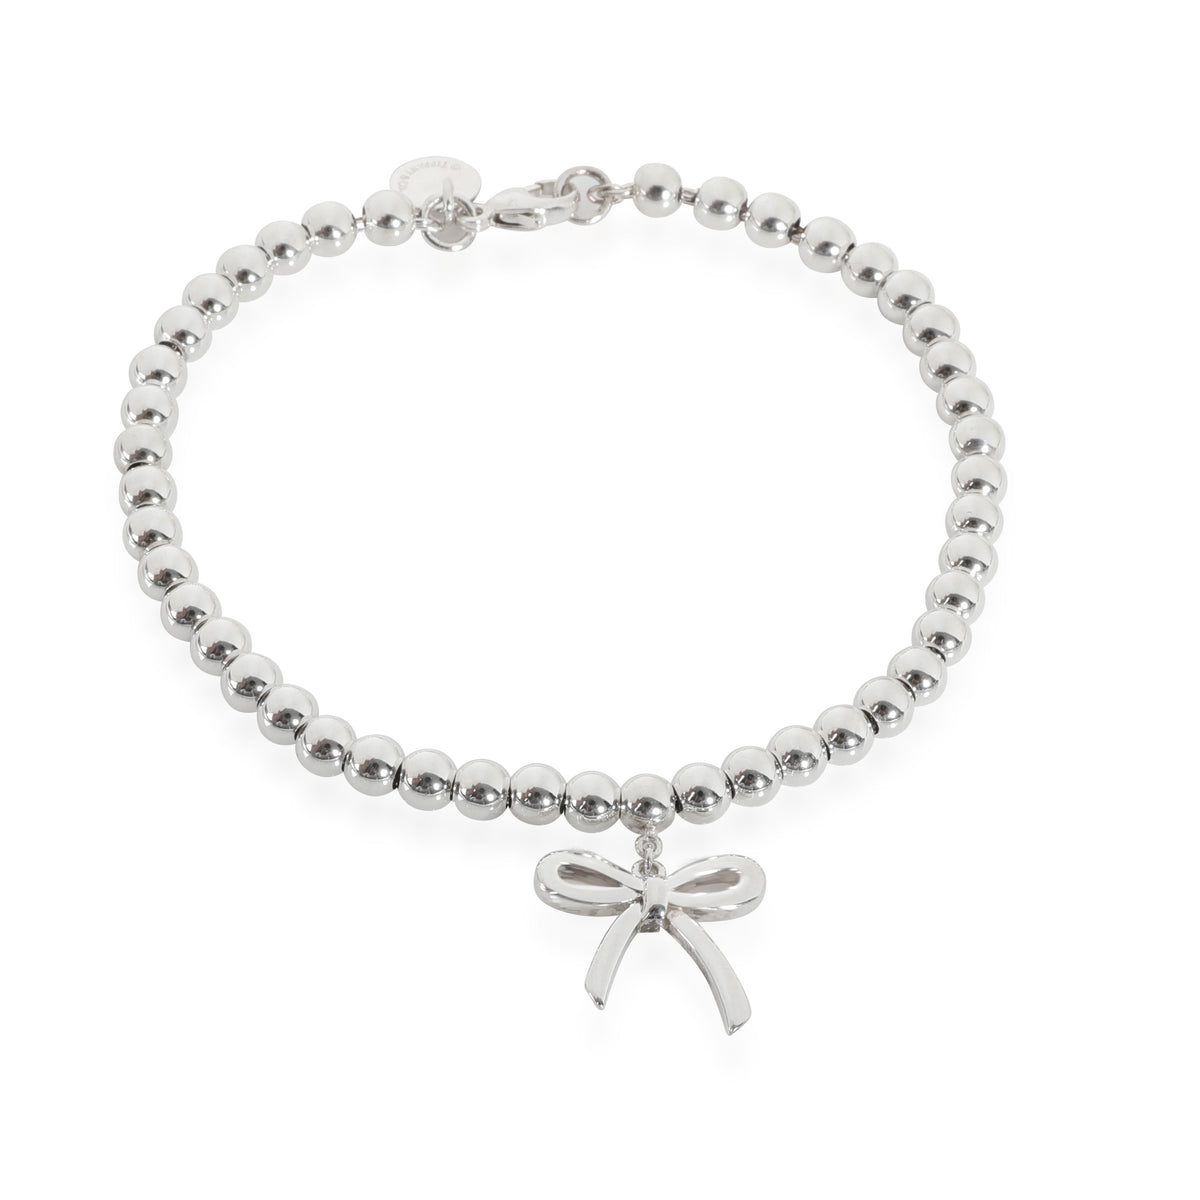 Tiffany & Co. Bow charm Bead Bracelet in  Sterling Silver